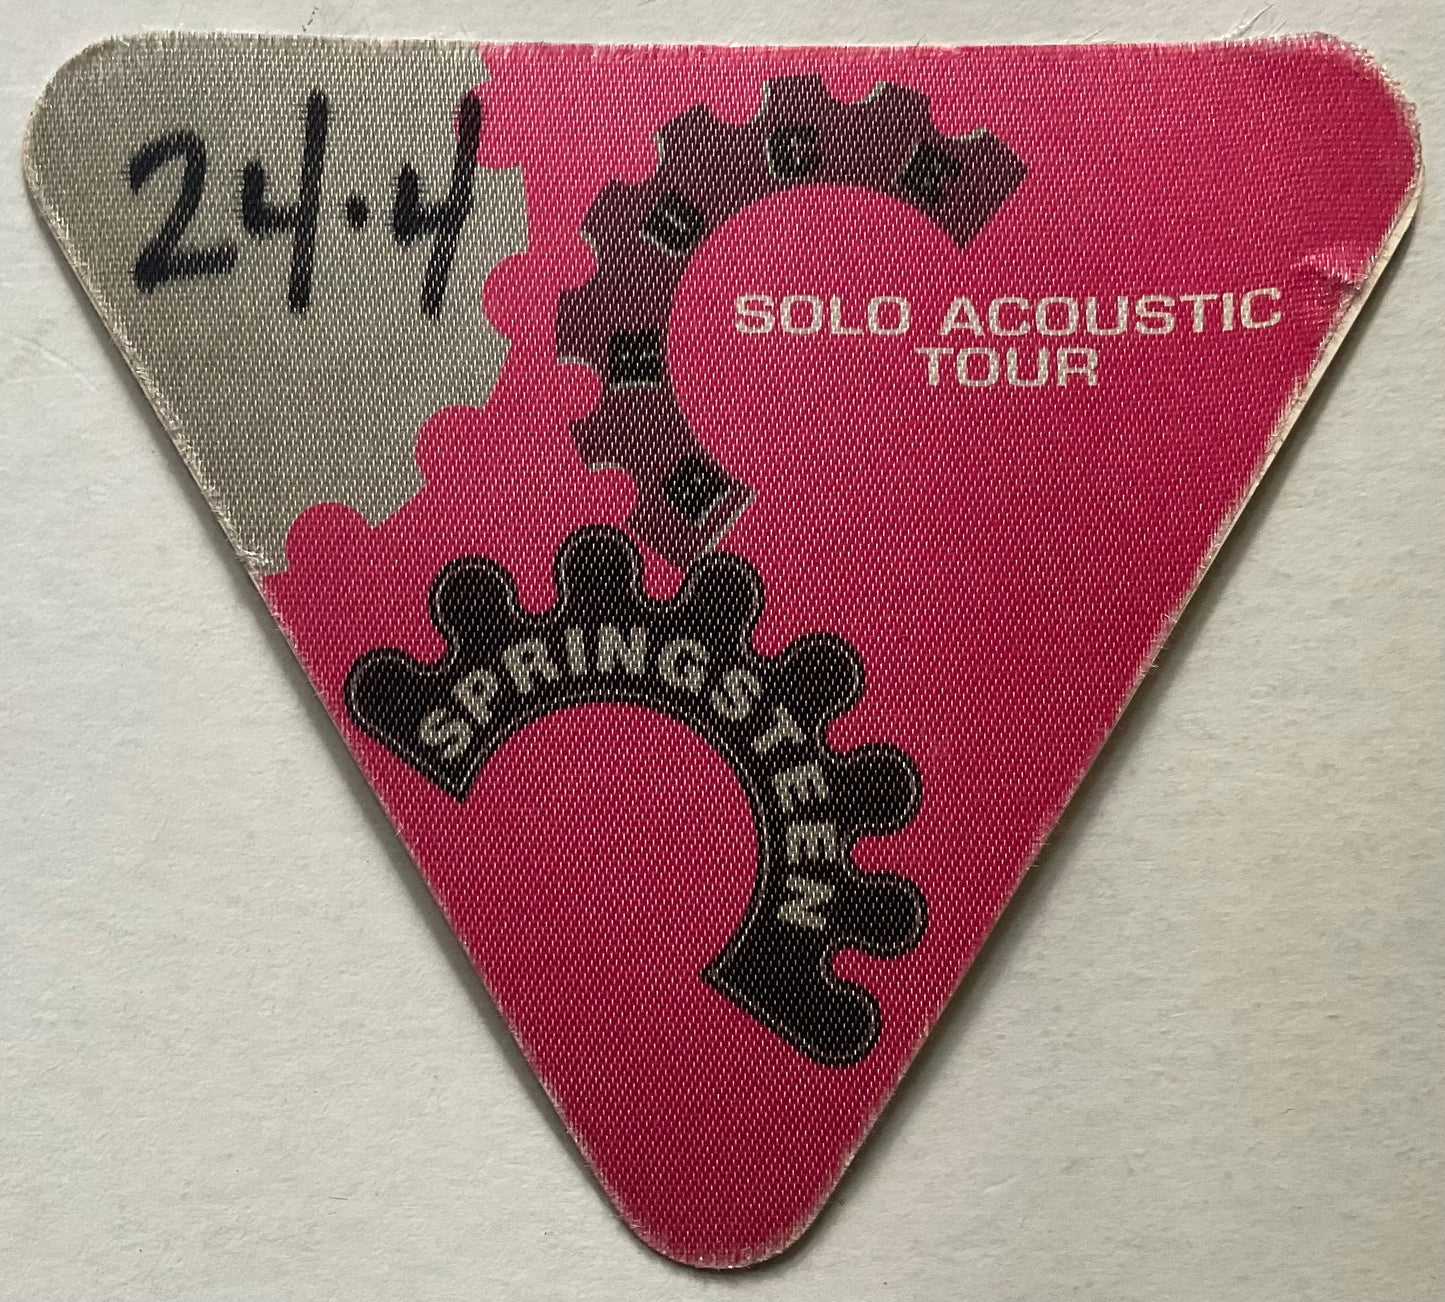 Bruce Springsteen Original Unused Concert Tour Backstage Pass Ticket Brixton Academy London 24th Apr 1996